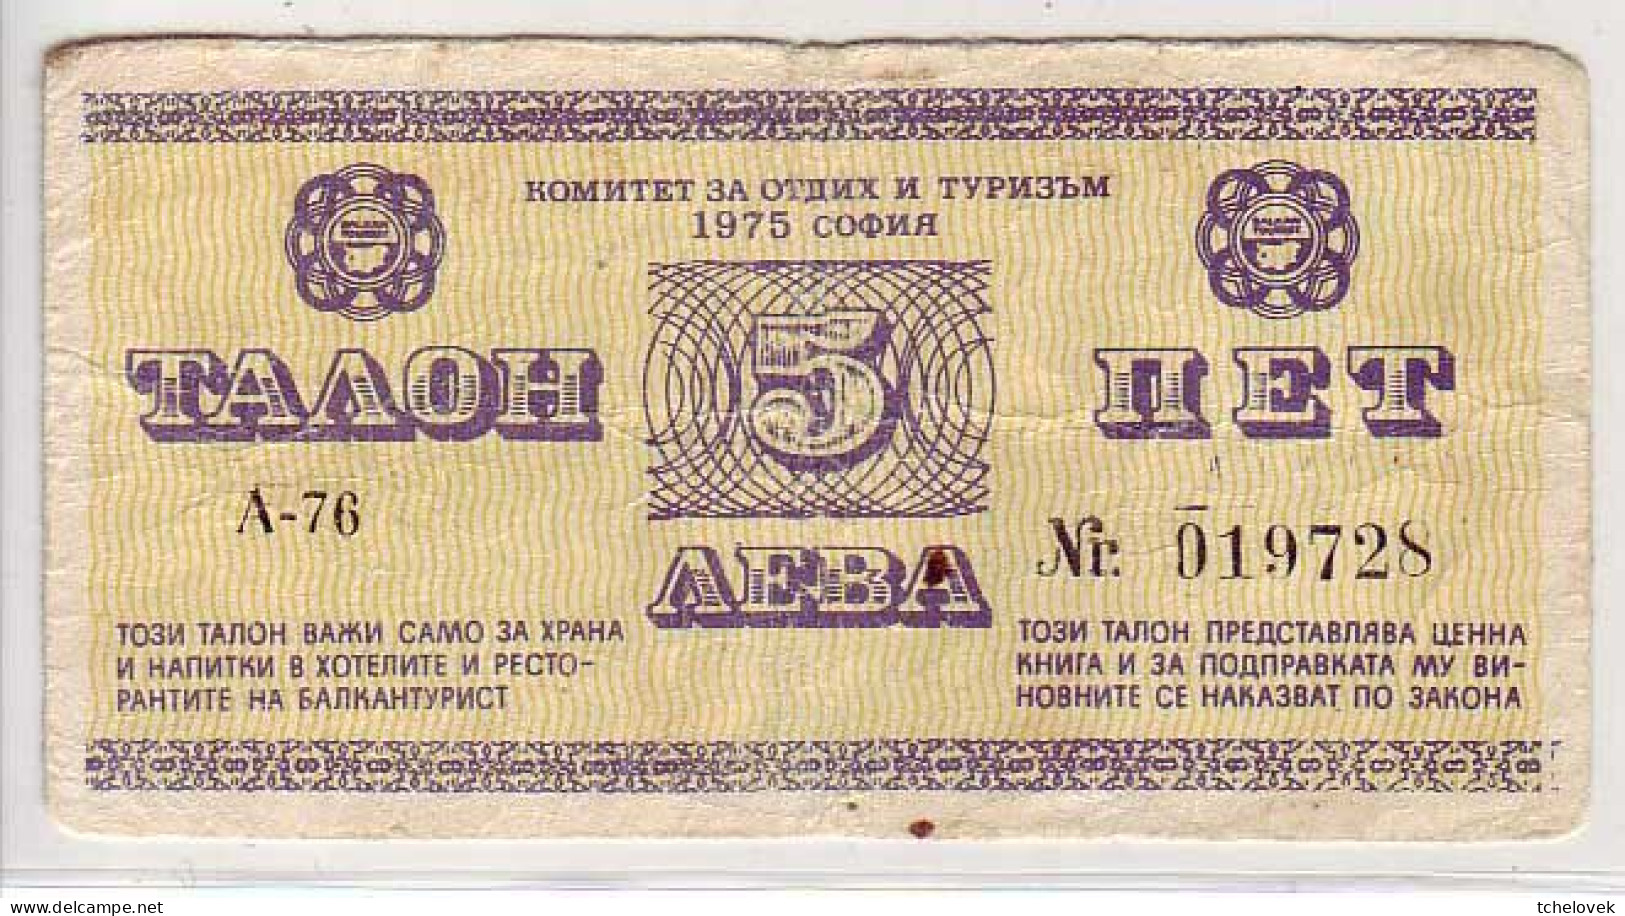 (Billets). Bulgarie Bulgaria. Foreing Exchange Certificate. Rare. Balkan Tourist. 1975. 5 Leva Serie A-76 N° 019728 - Bulgarie